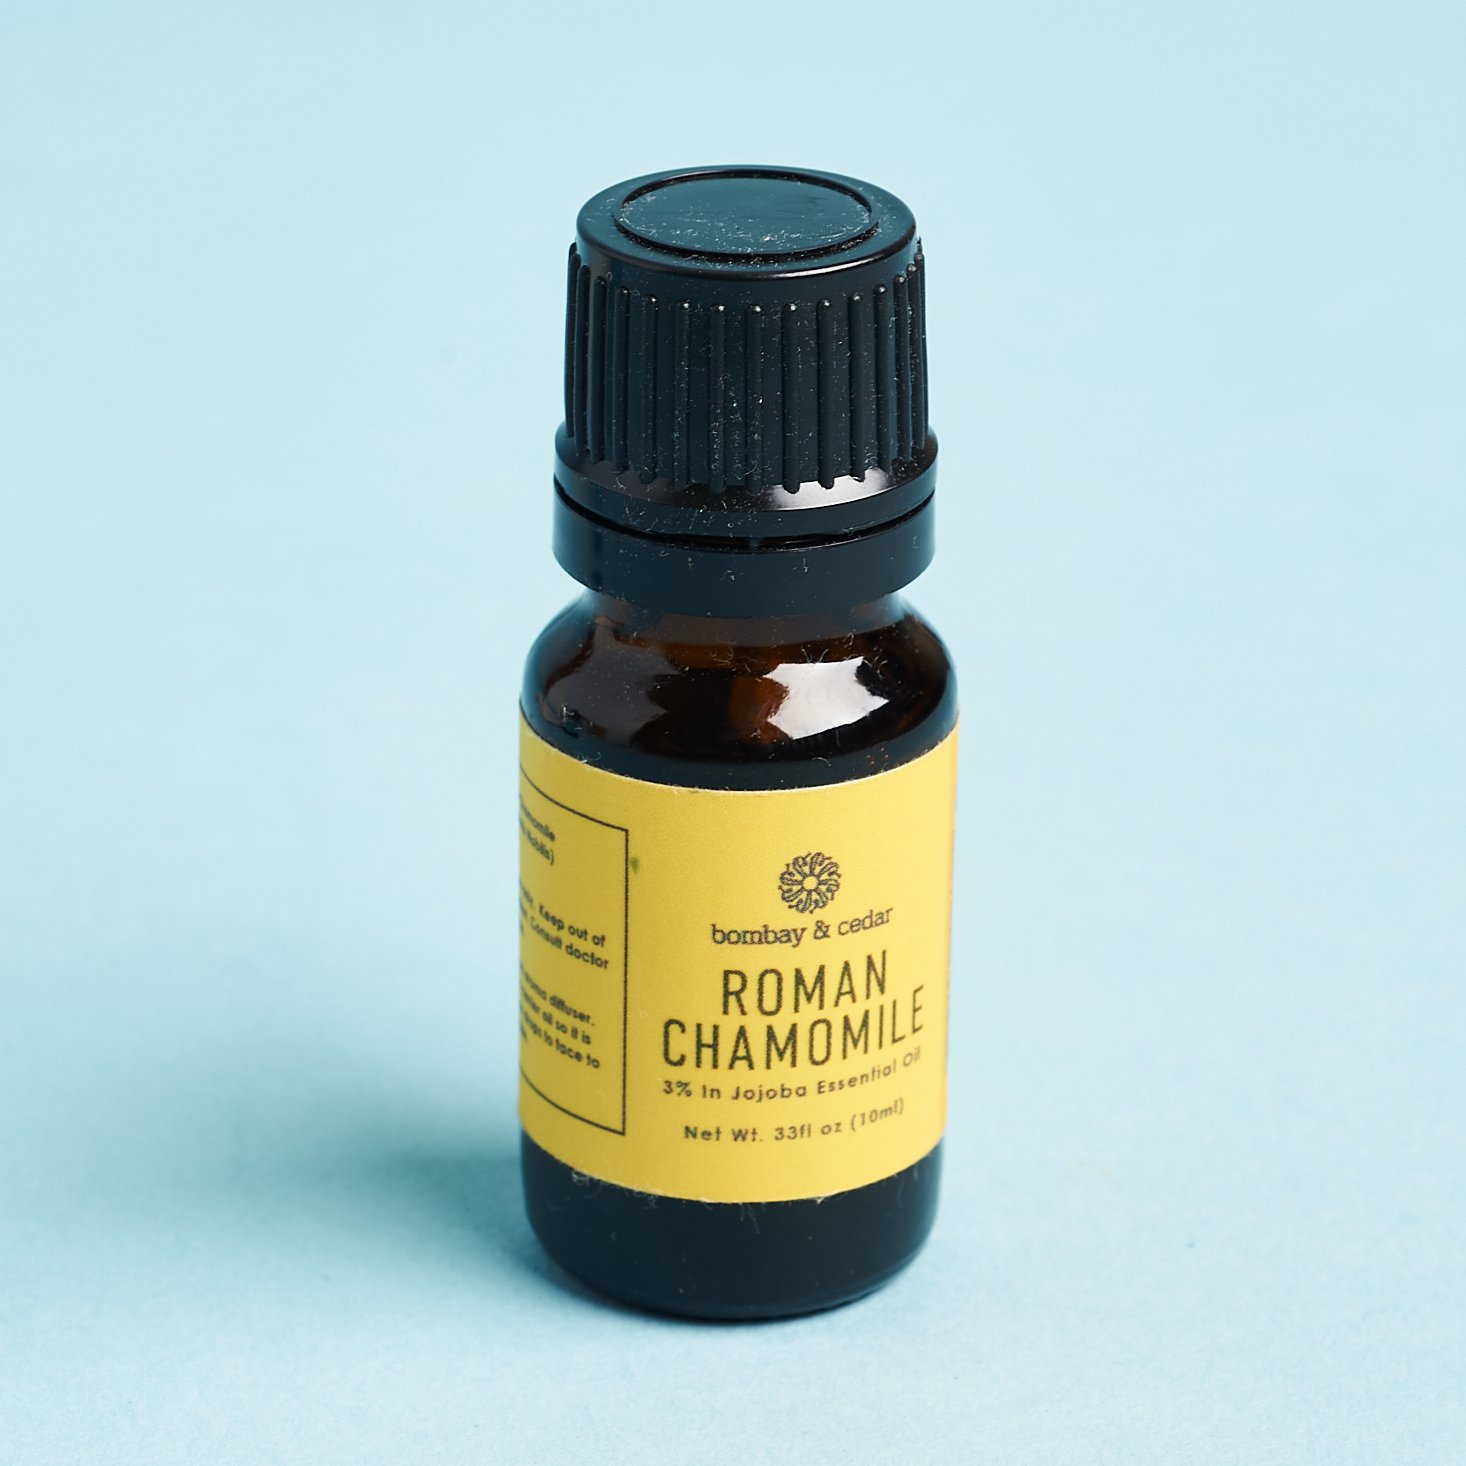 yellow label roman chamomile oil bottle